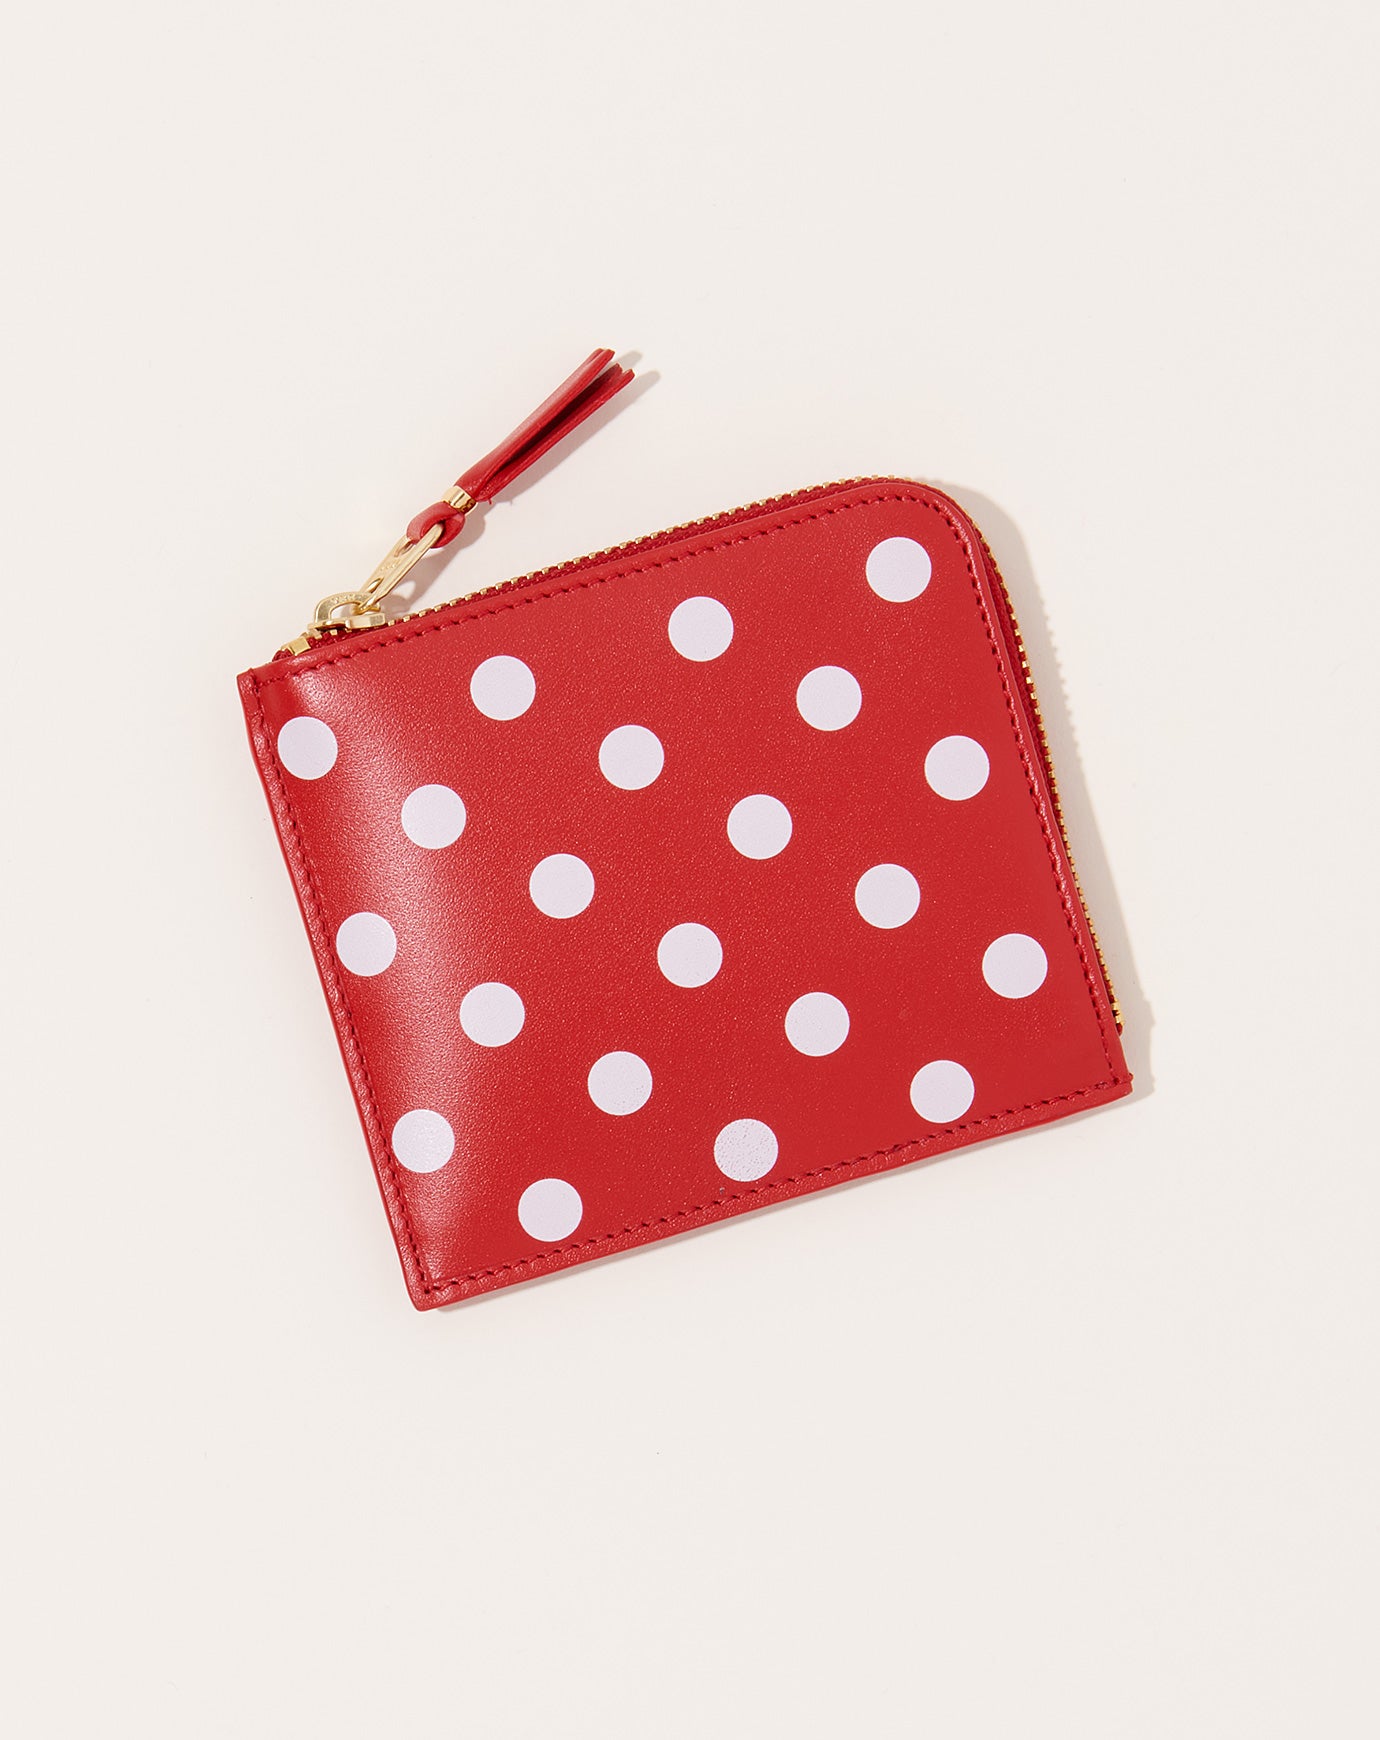 Comme des Garçons  Polka Dots Printed Zip Around Wallet in Red